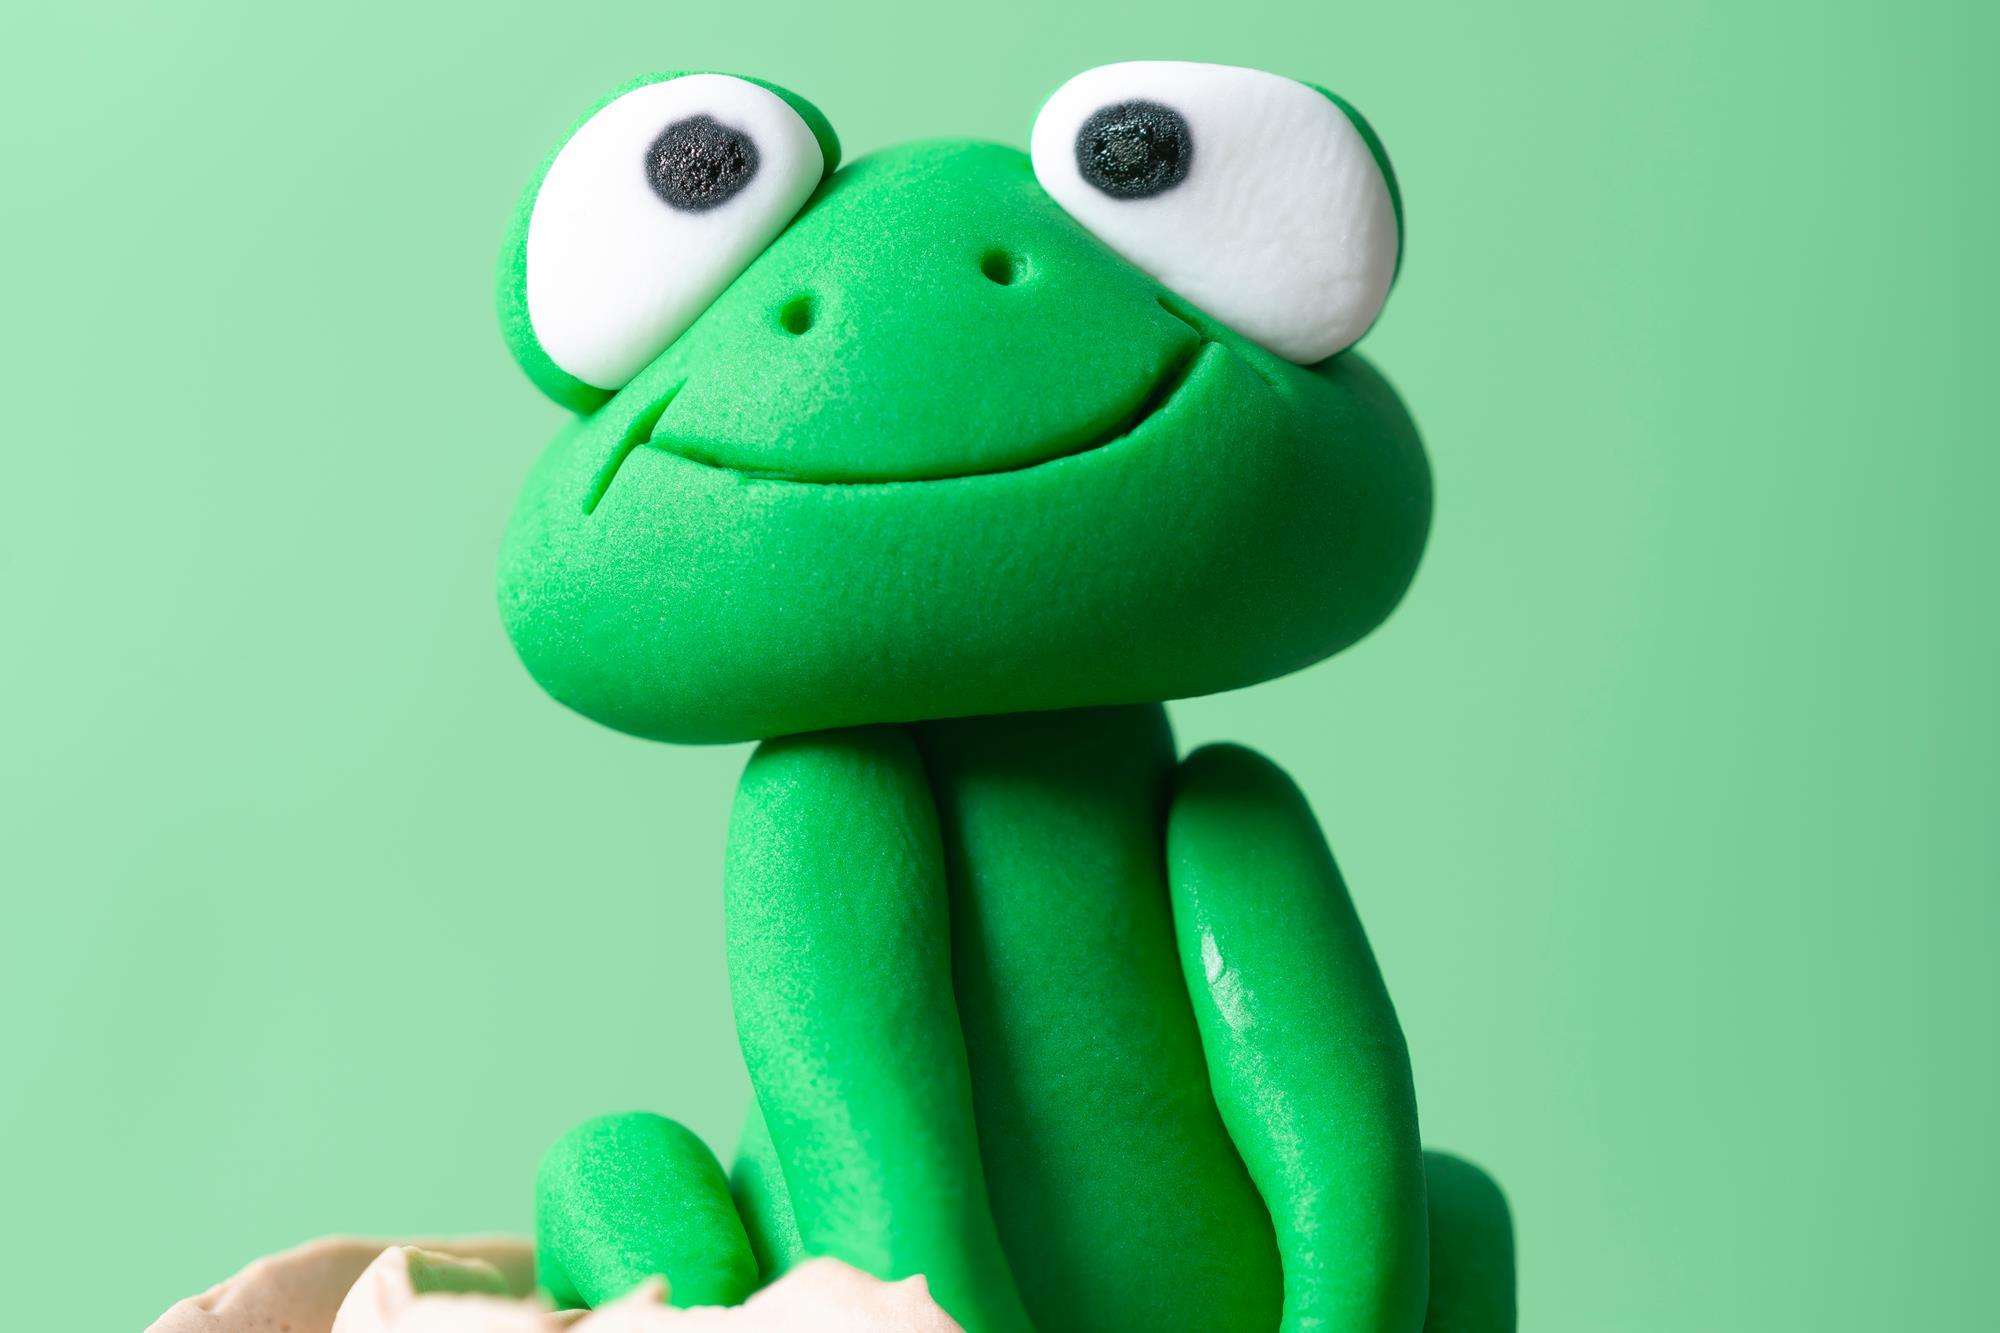 Crazy Frog returning to takeover TikTok!